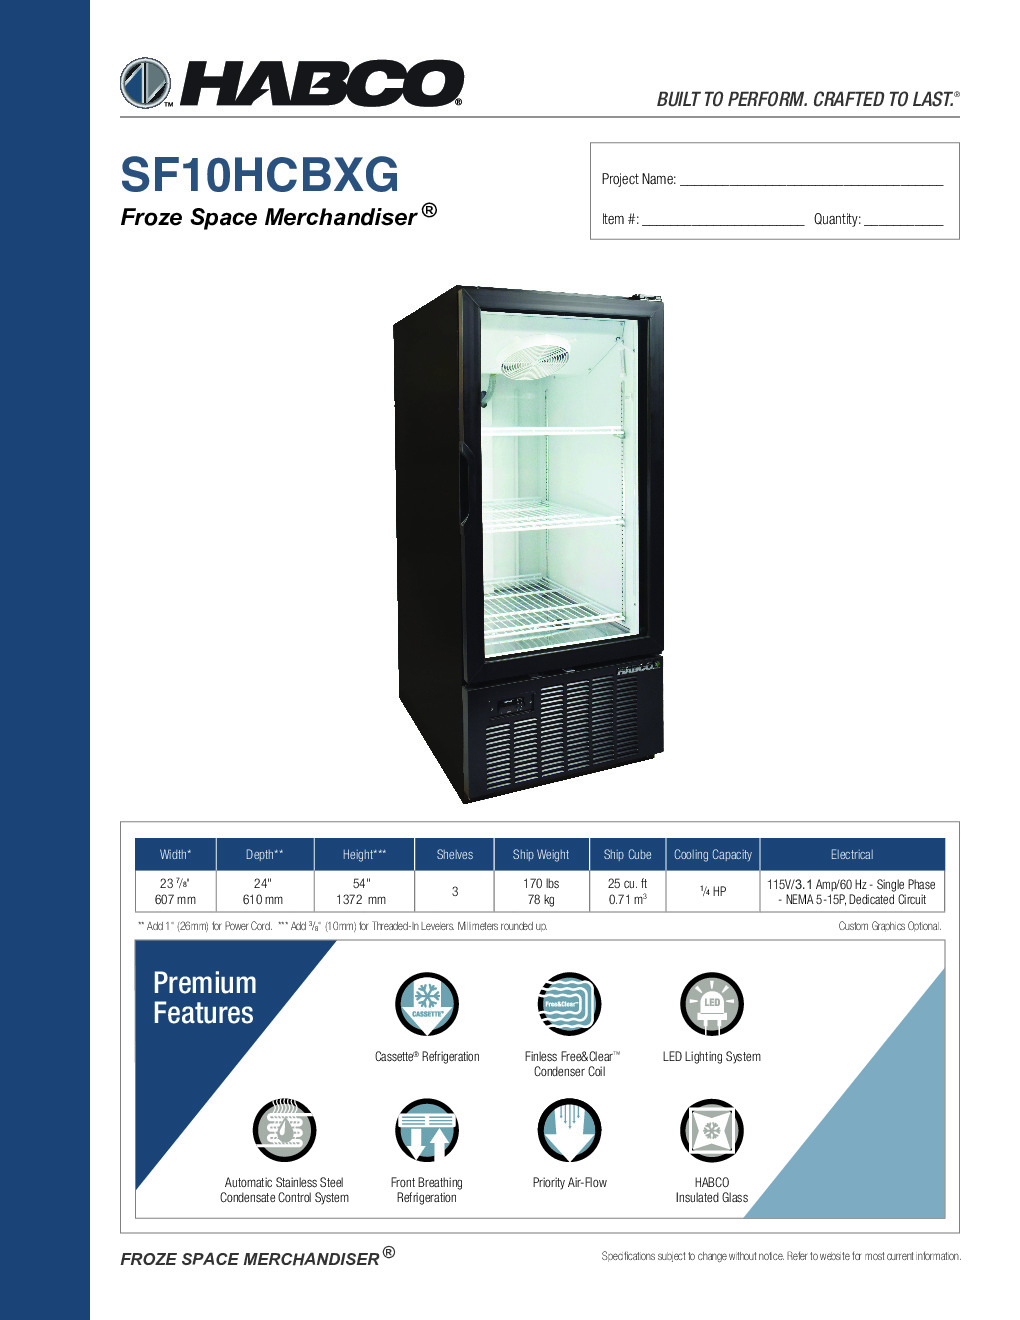 HABCO SF10HCBXG Merchandiser Freezer